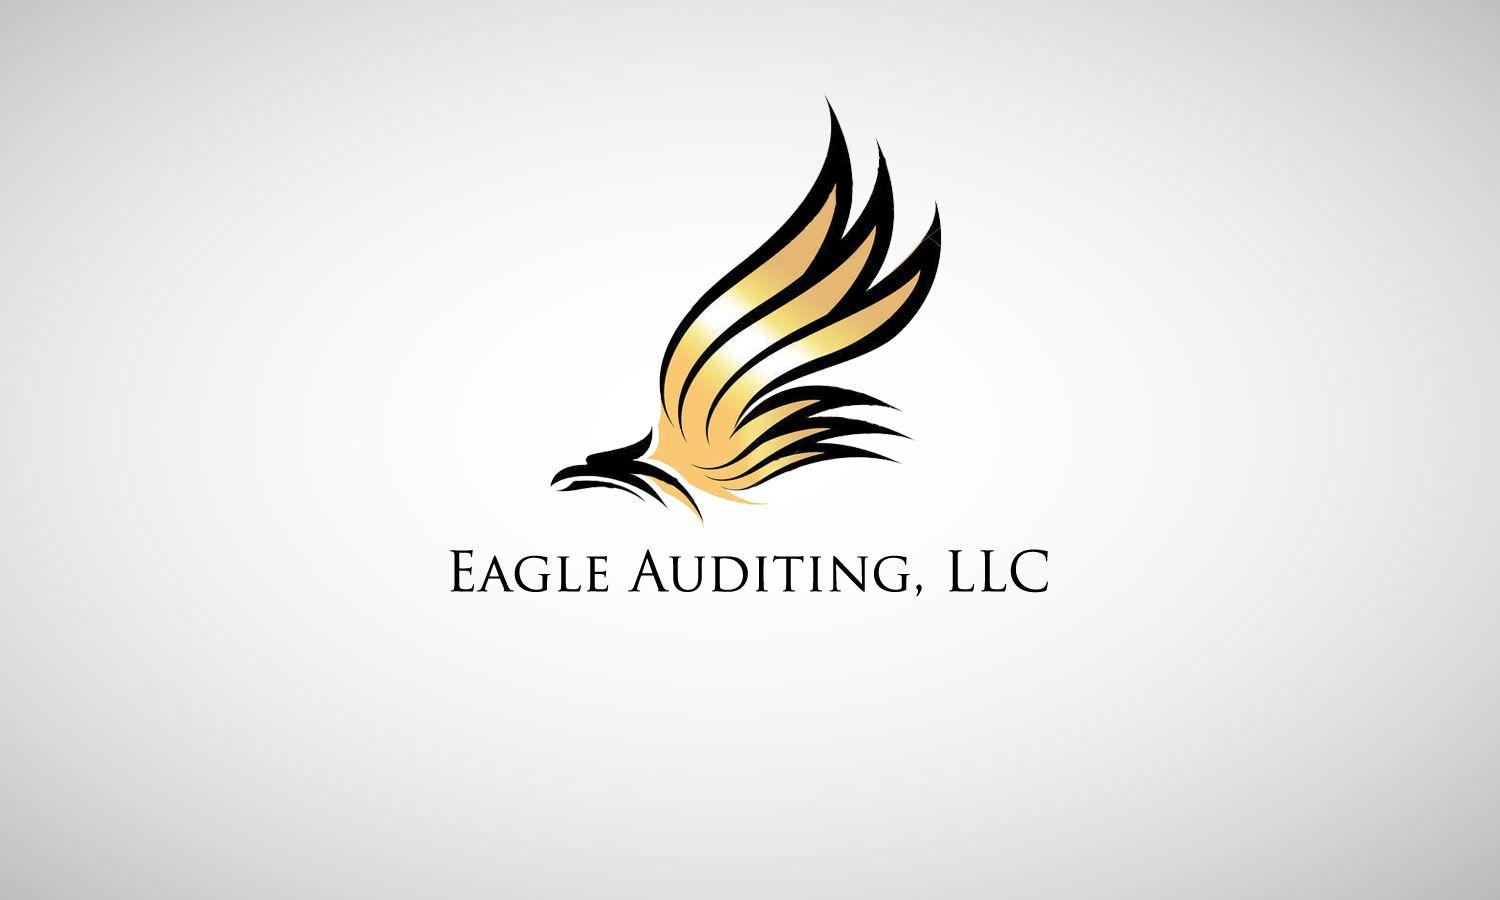 Auditing Logo - Serious, Modern, Auditing Logo Design for Eagle Auditing, LLC